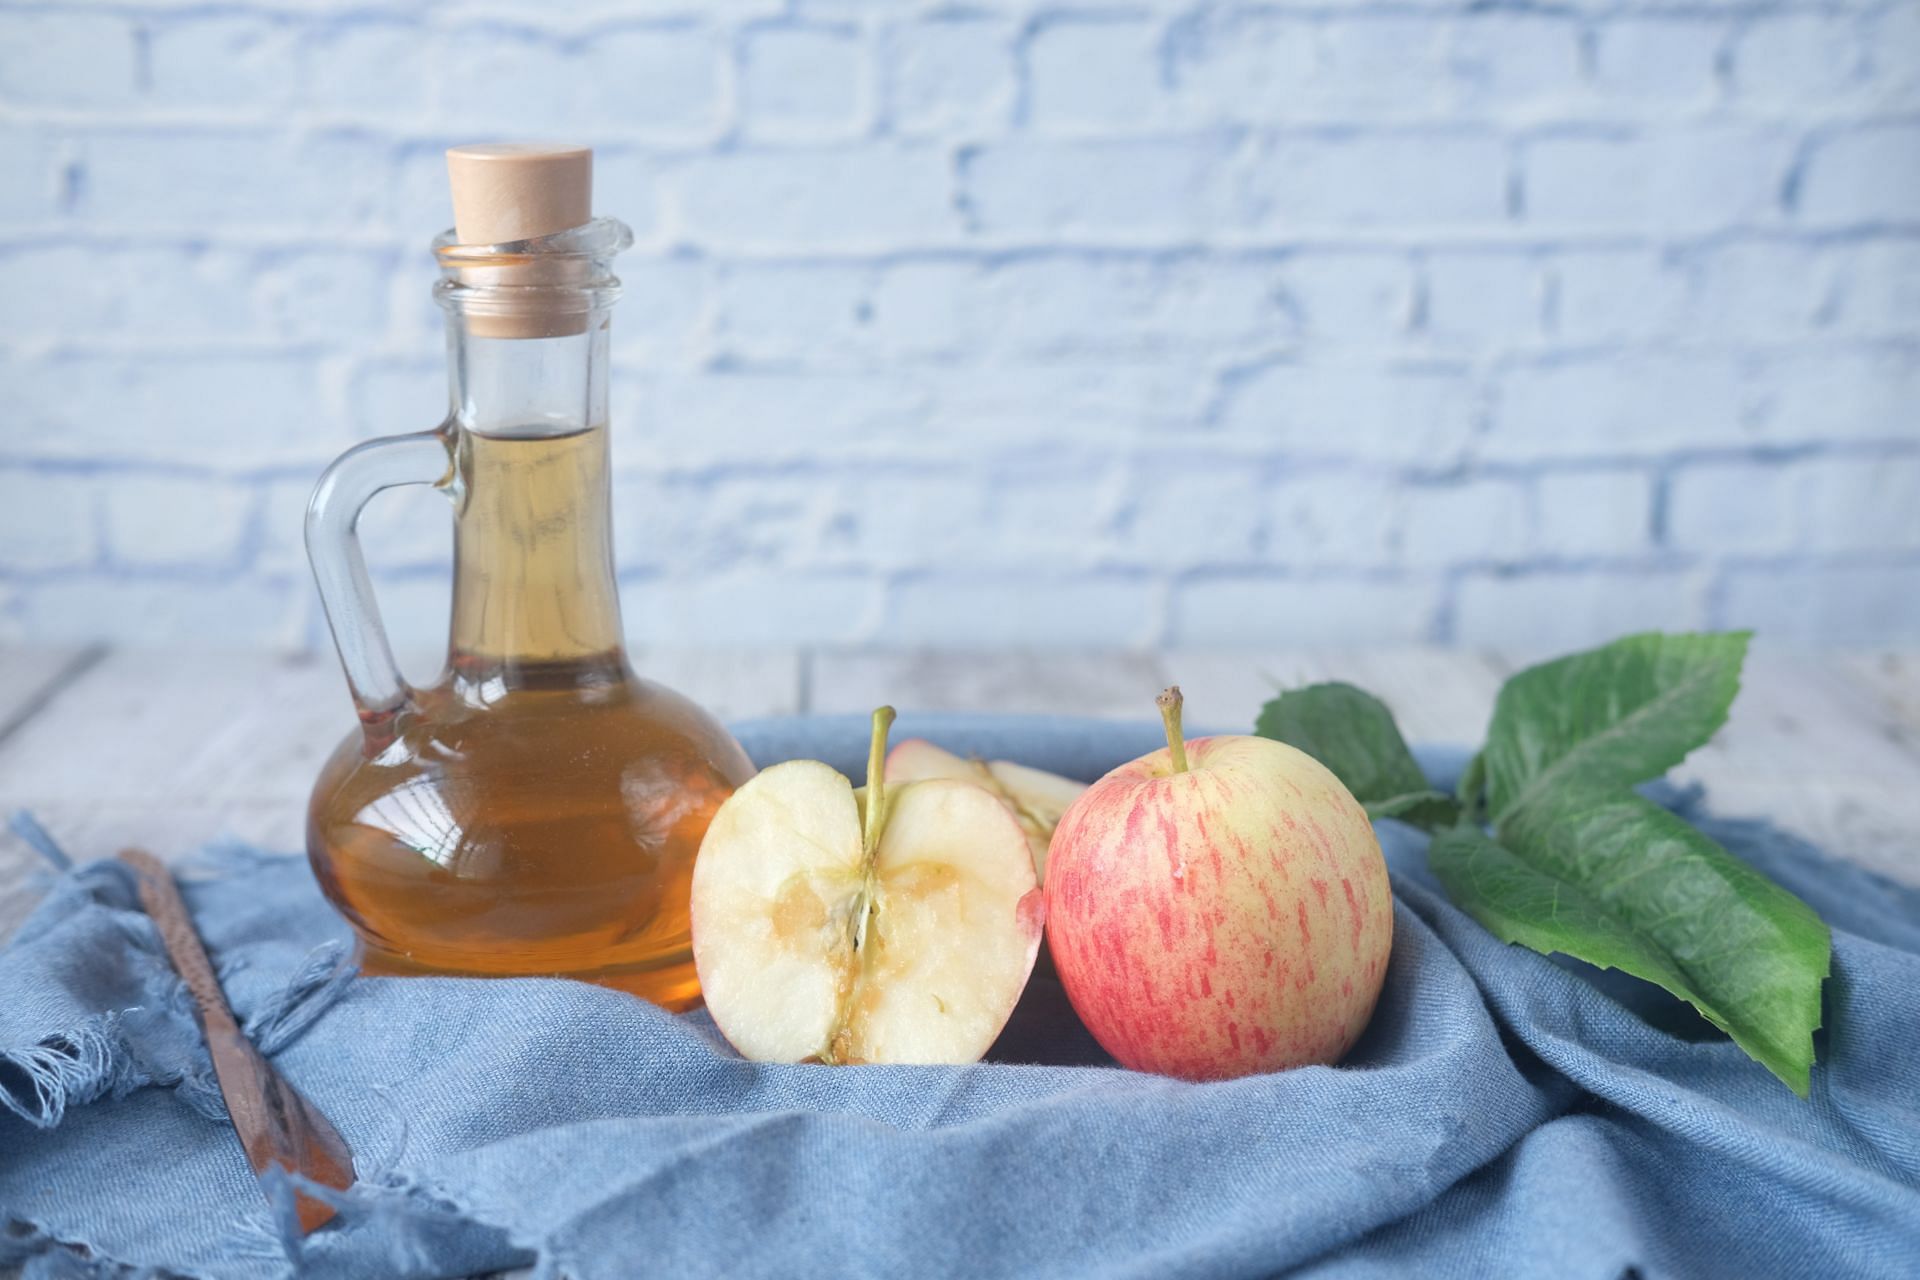 Apple cider vinegar is known for its detox properties. (Image via Unsplash/Towfiqu Barbhuiya)